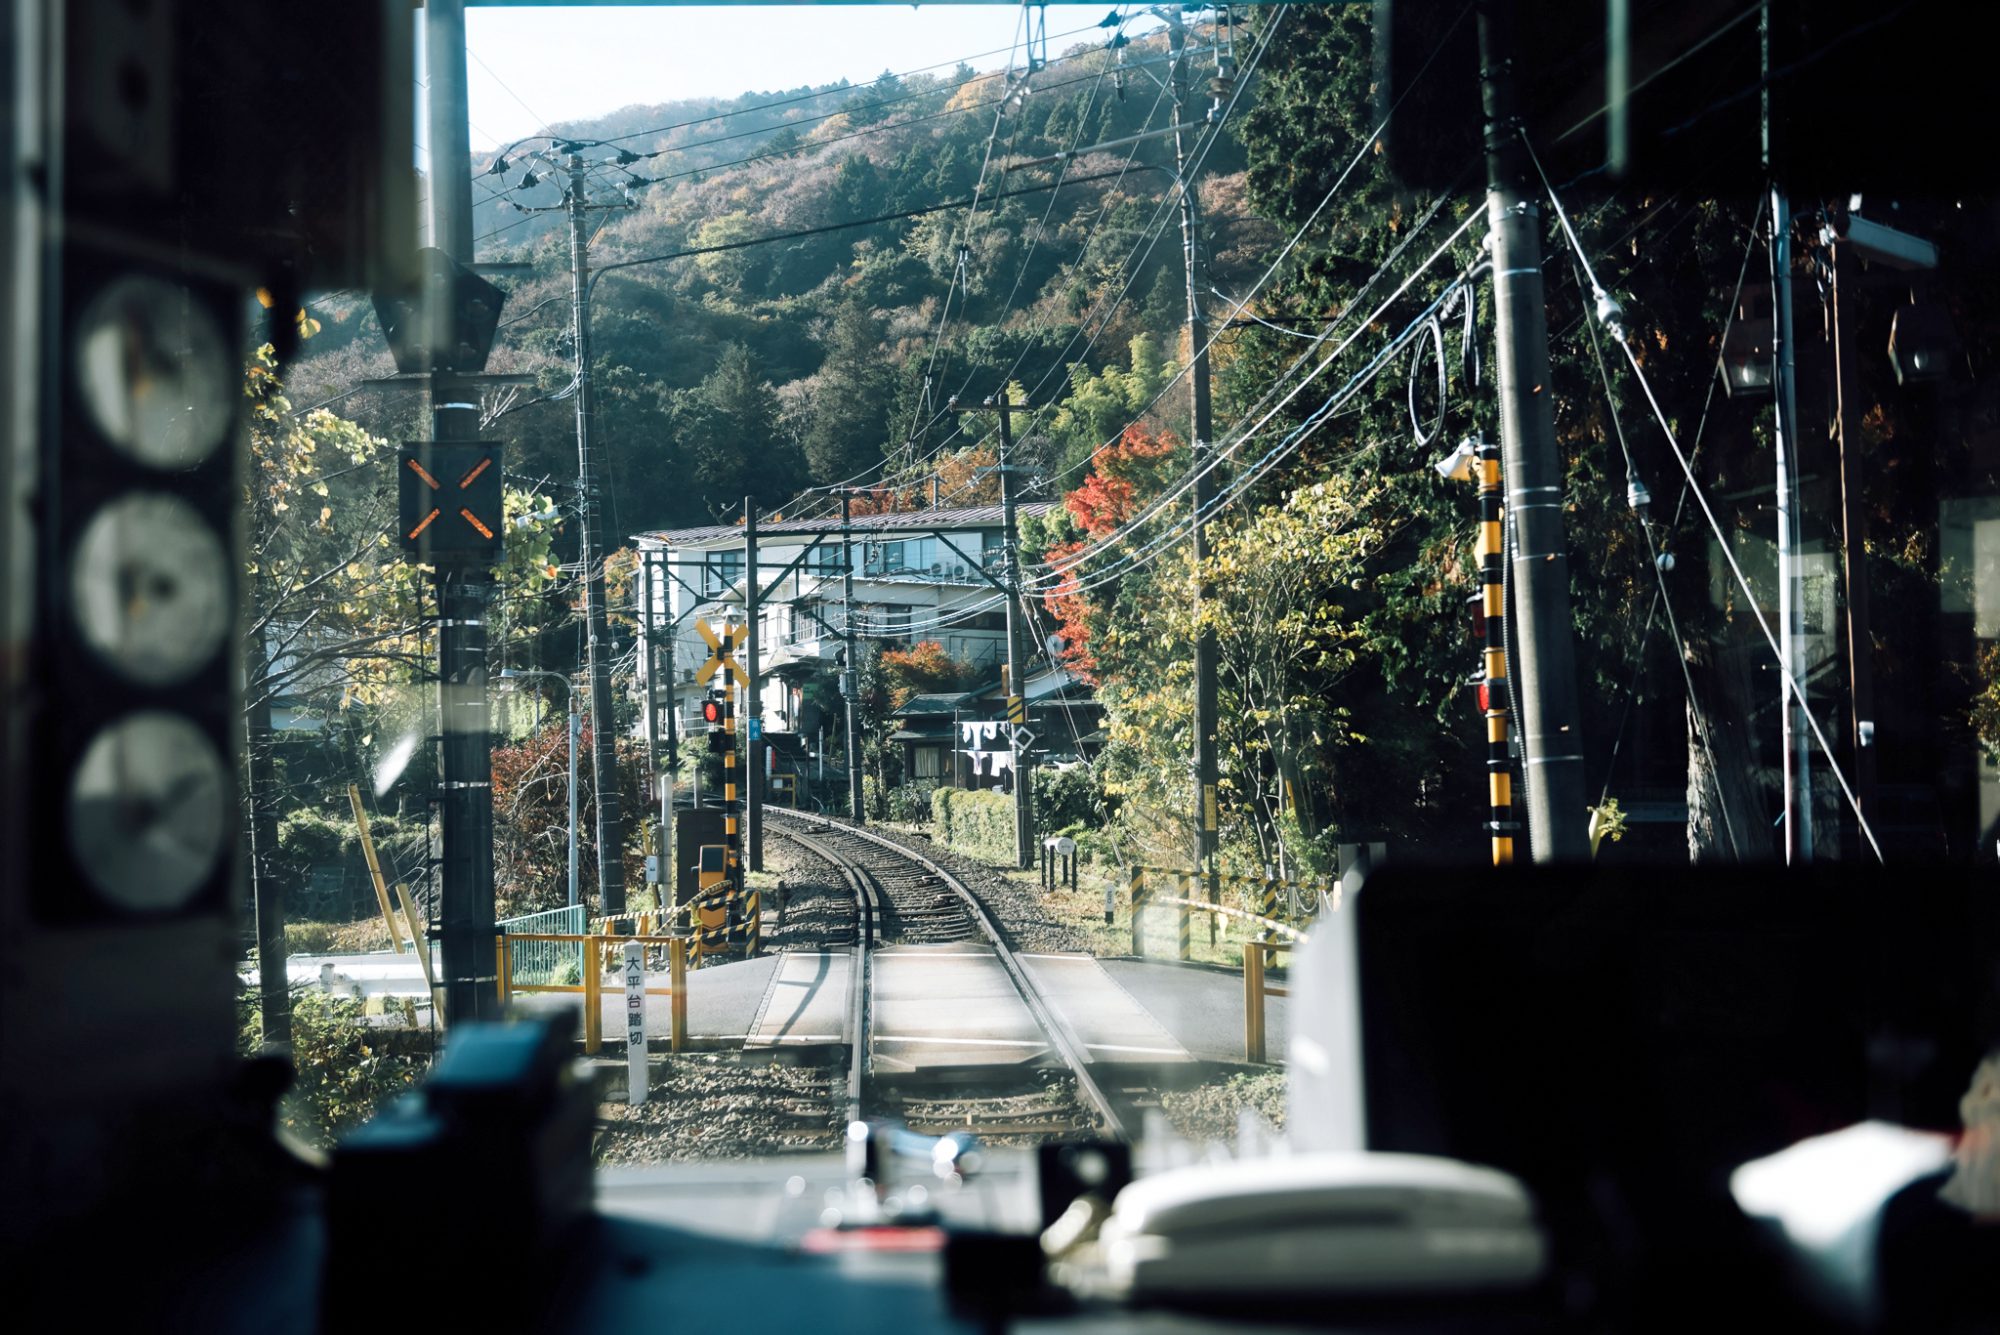 Wherever the trains take me, JAPAN